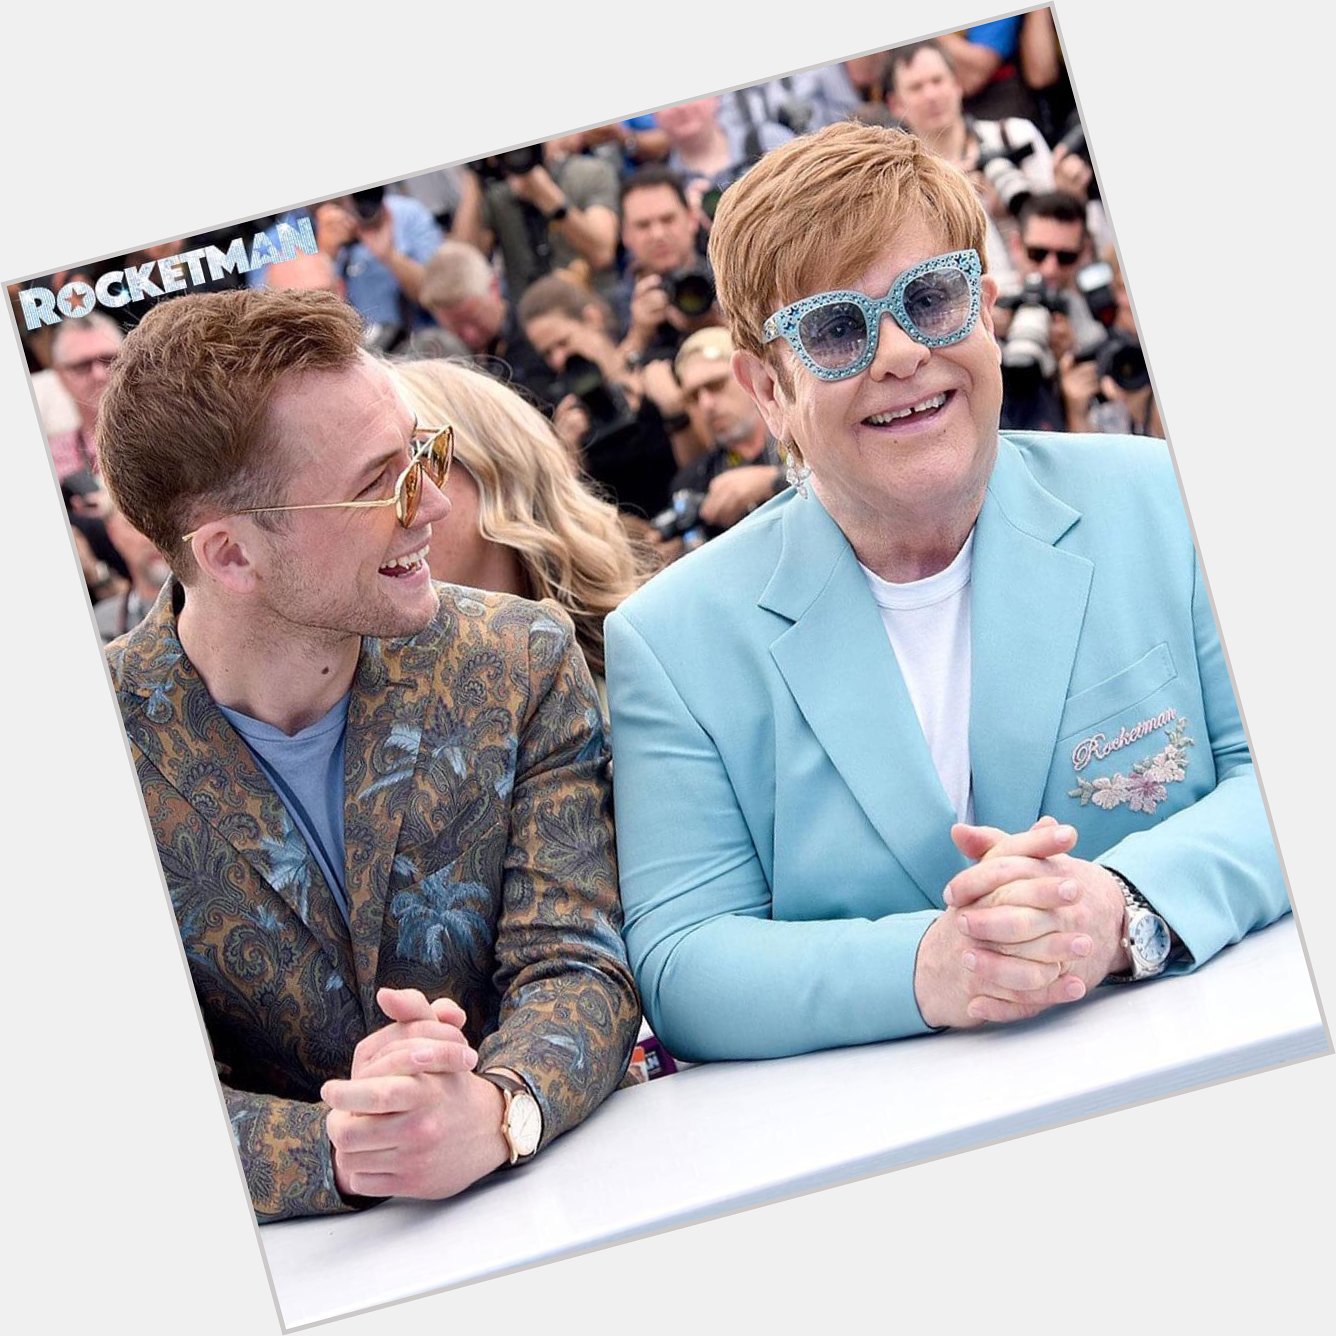 Wishing a Happy Birthday to the Rocketman himself, Elton John! 